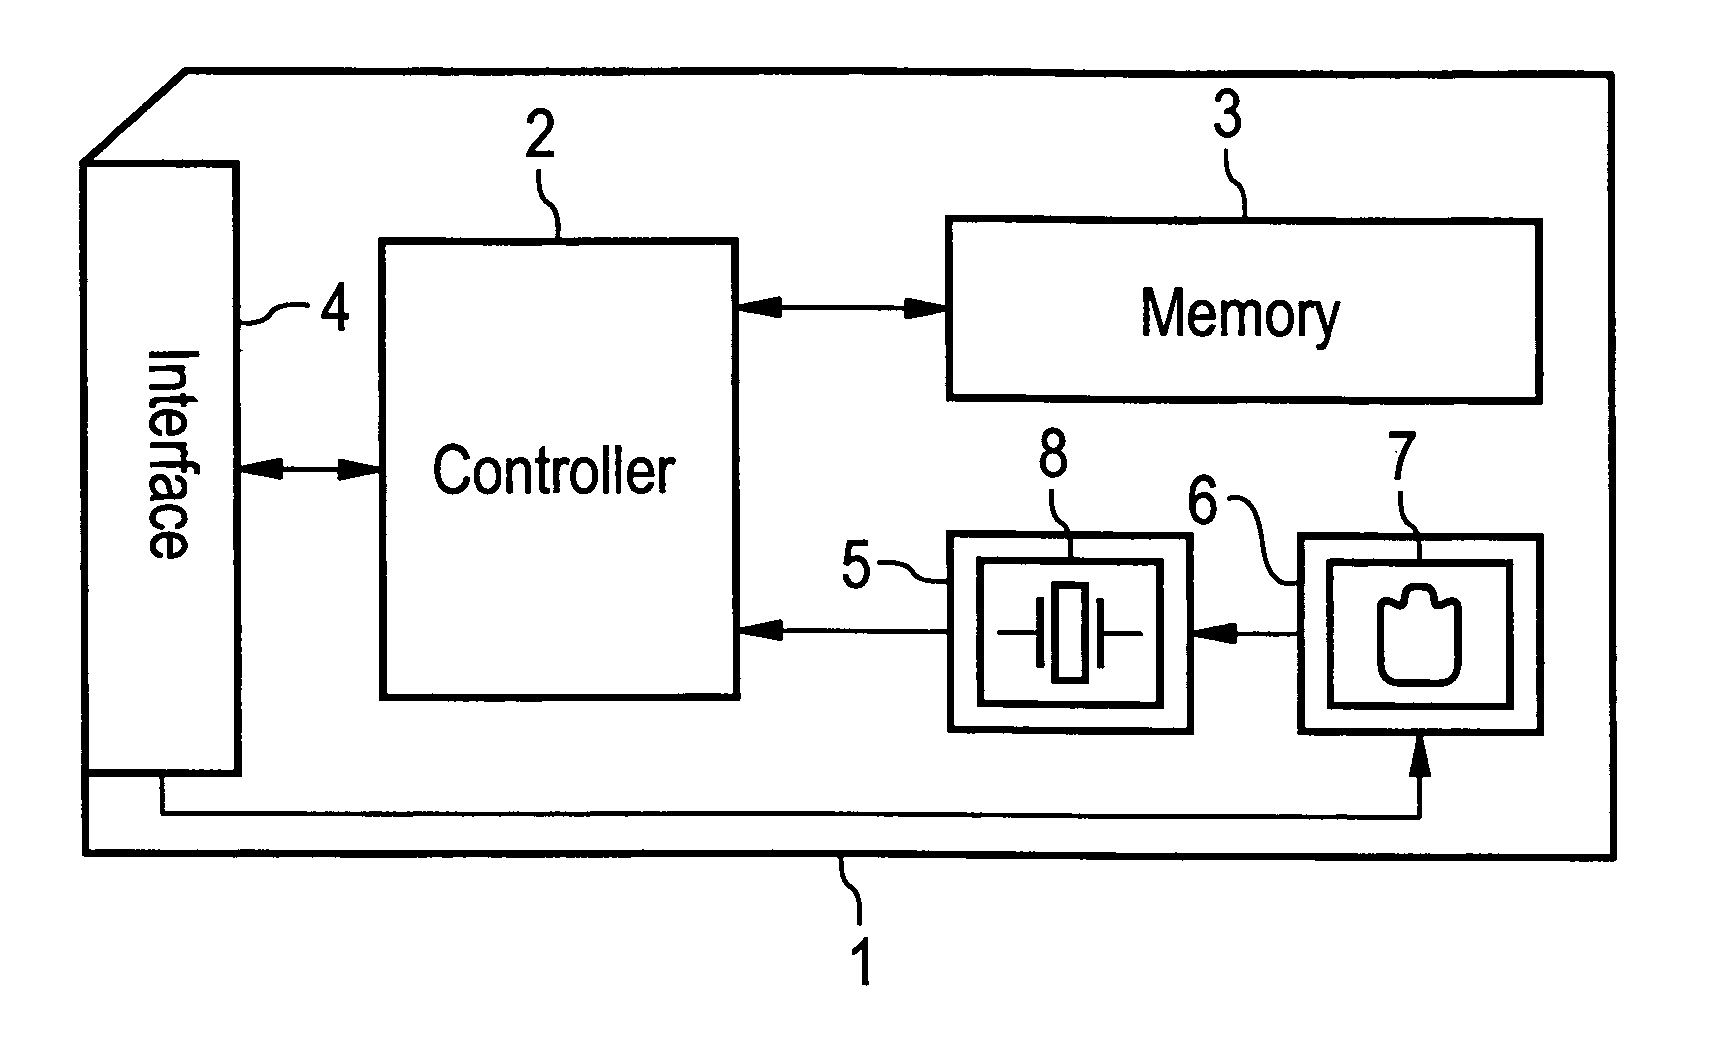 Non-volatile memory card with autarkic chronometer